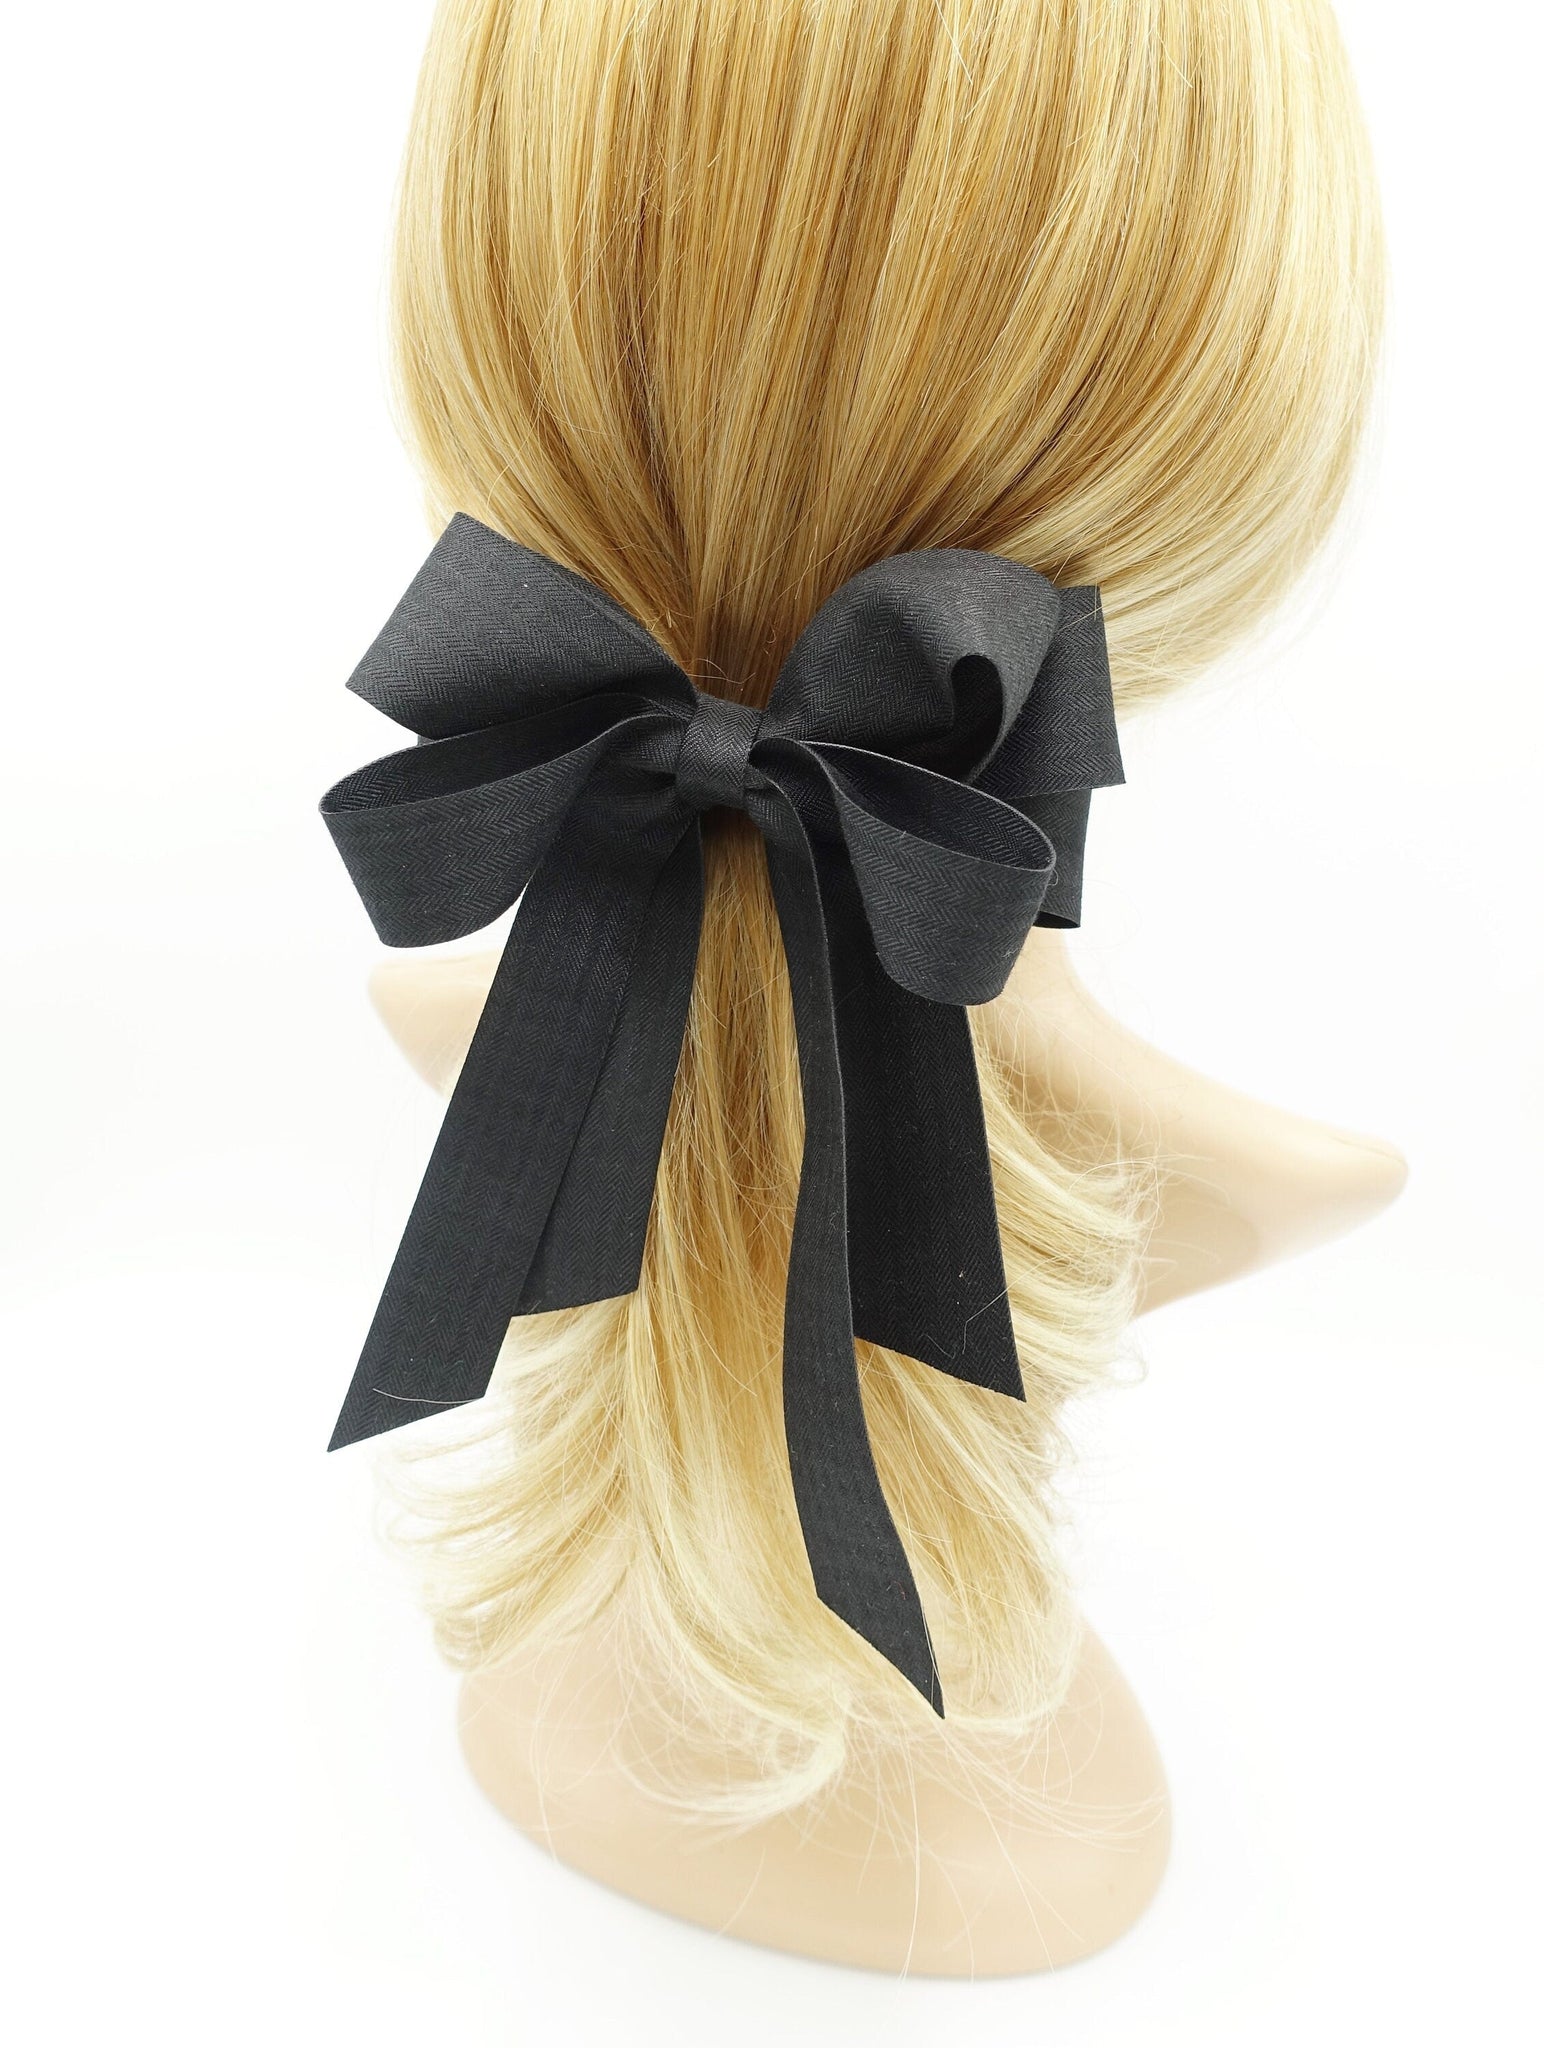 veryshine.com Barrette (Bow) herringbone multi wing hair bow hair accessory for women